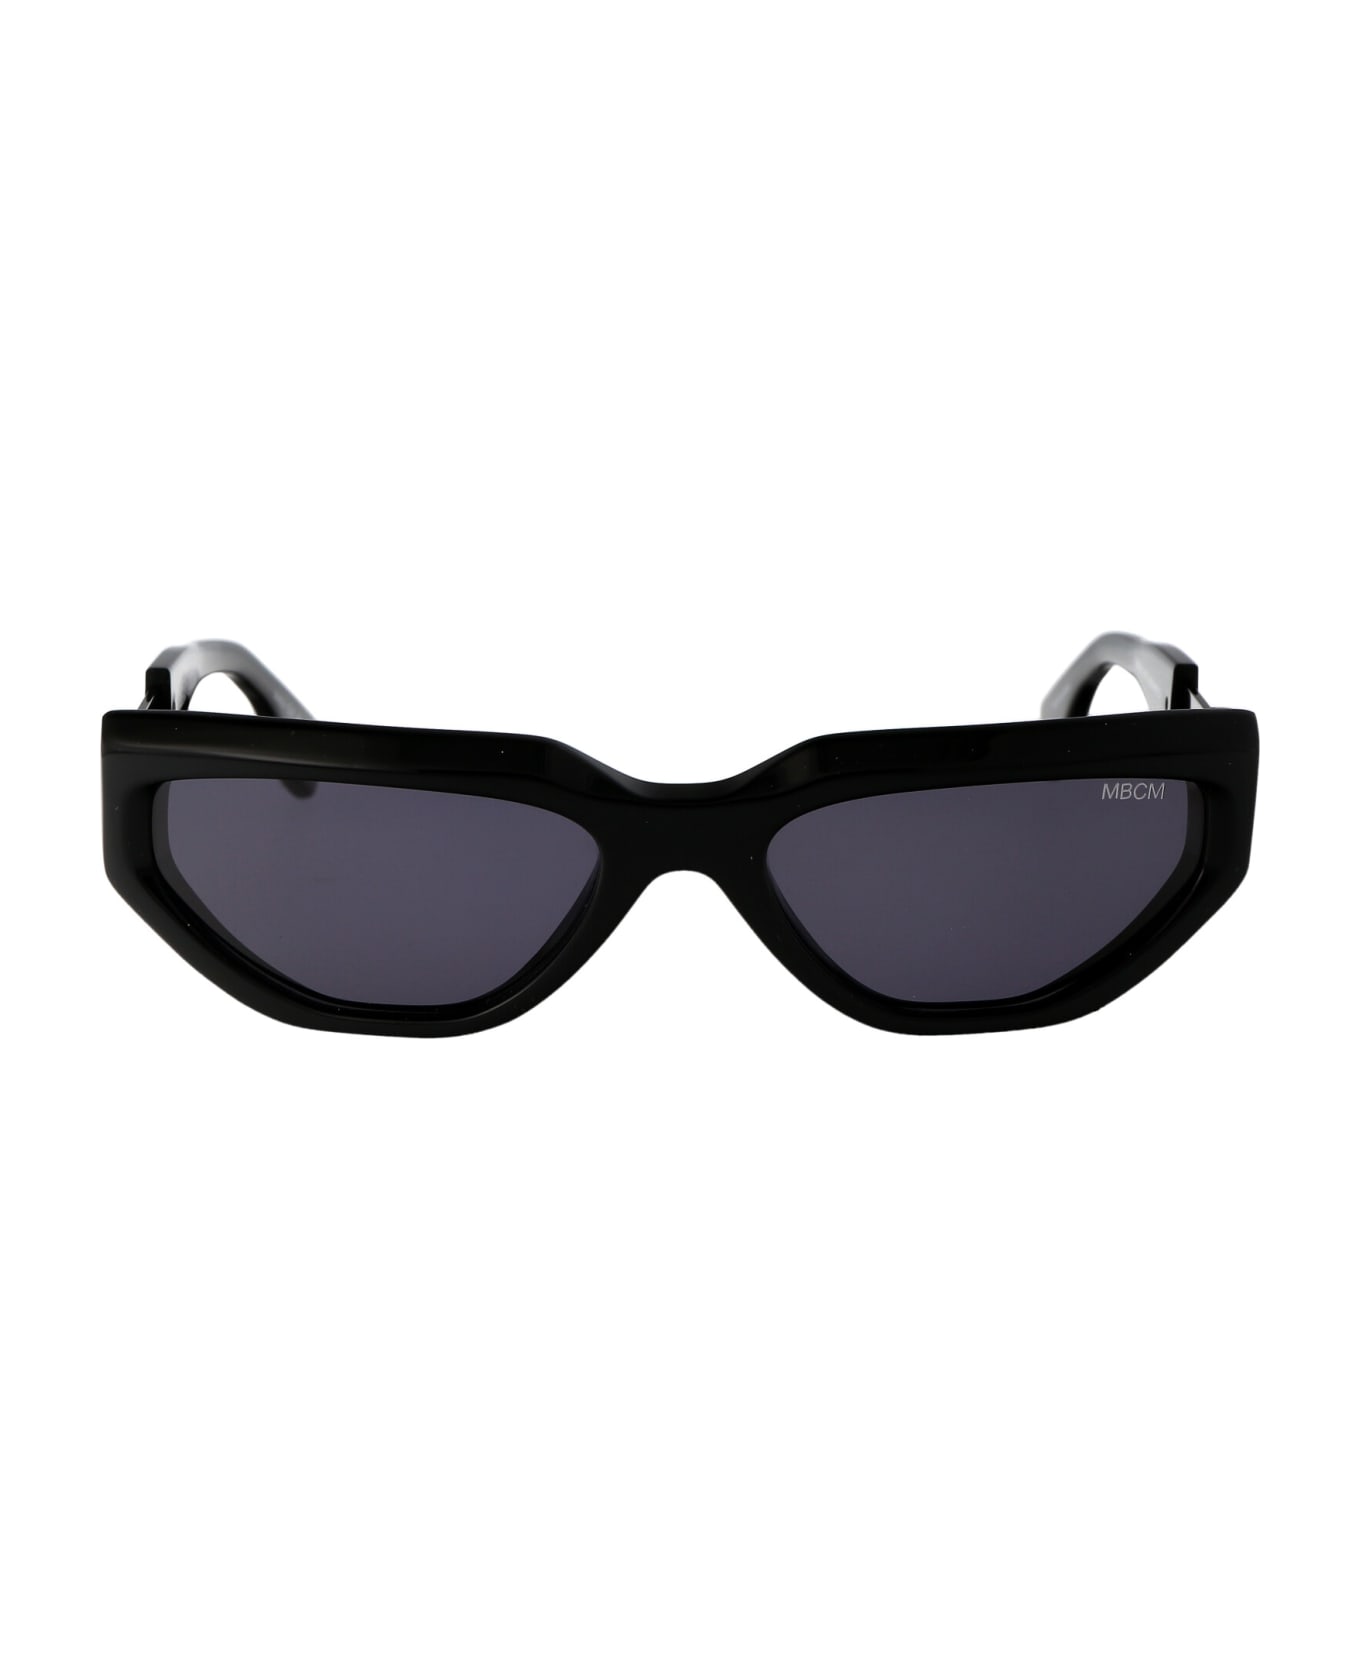 Marcelo Burlon Quilmes Sunglasses - 1007 BLACK